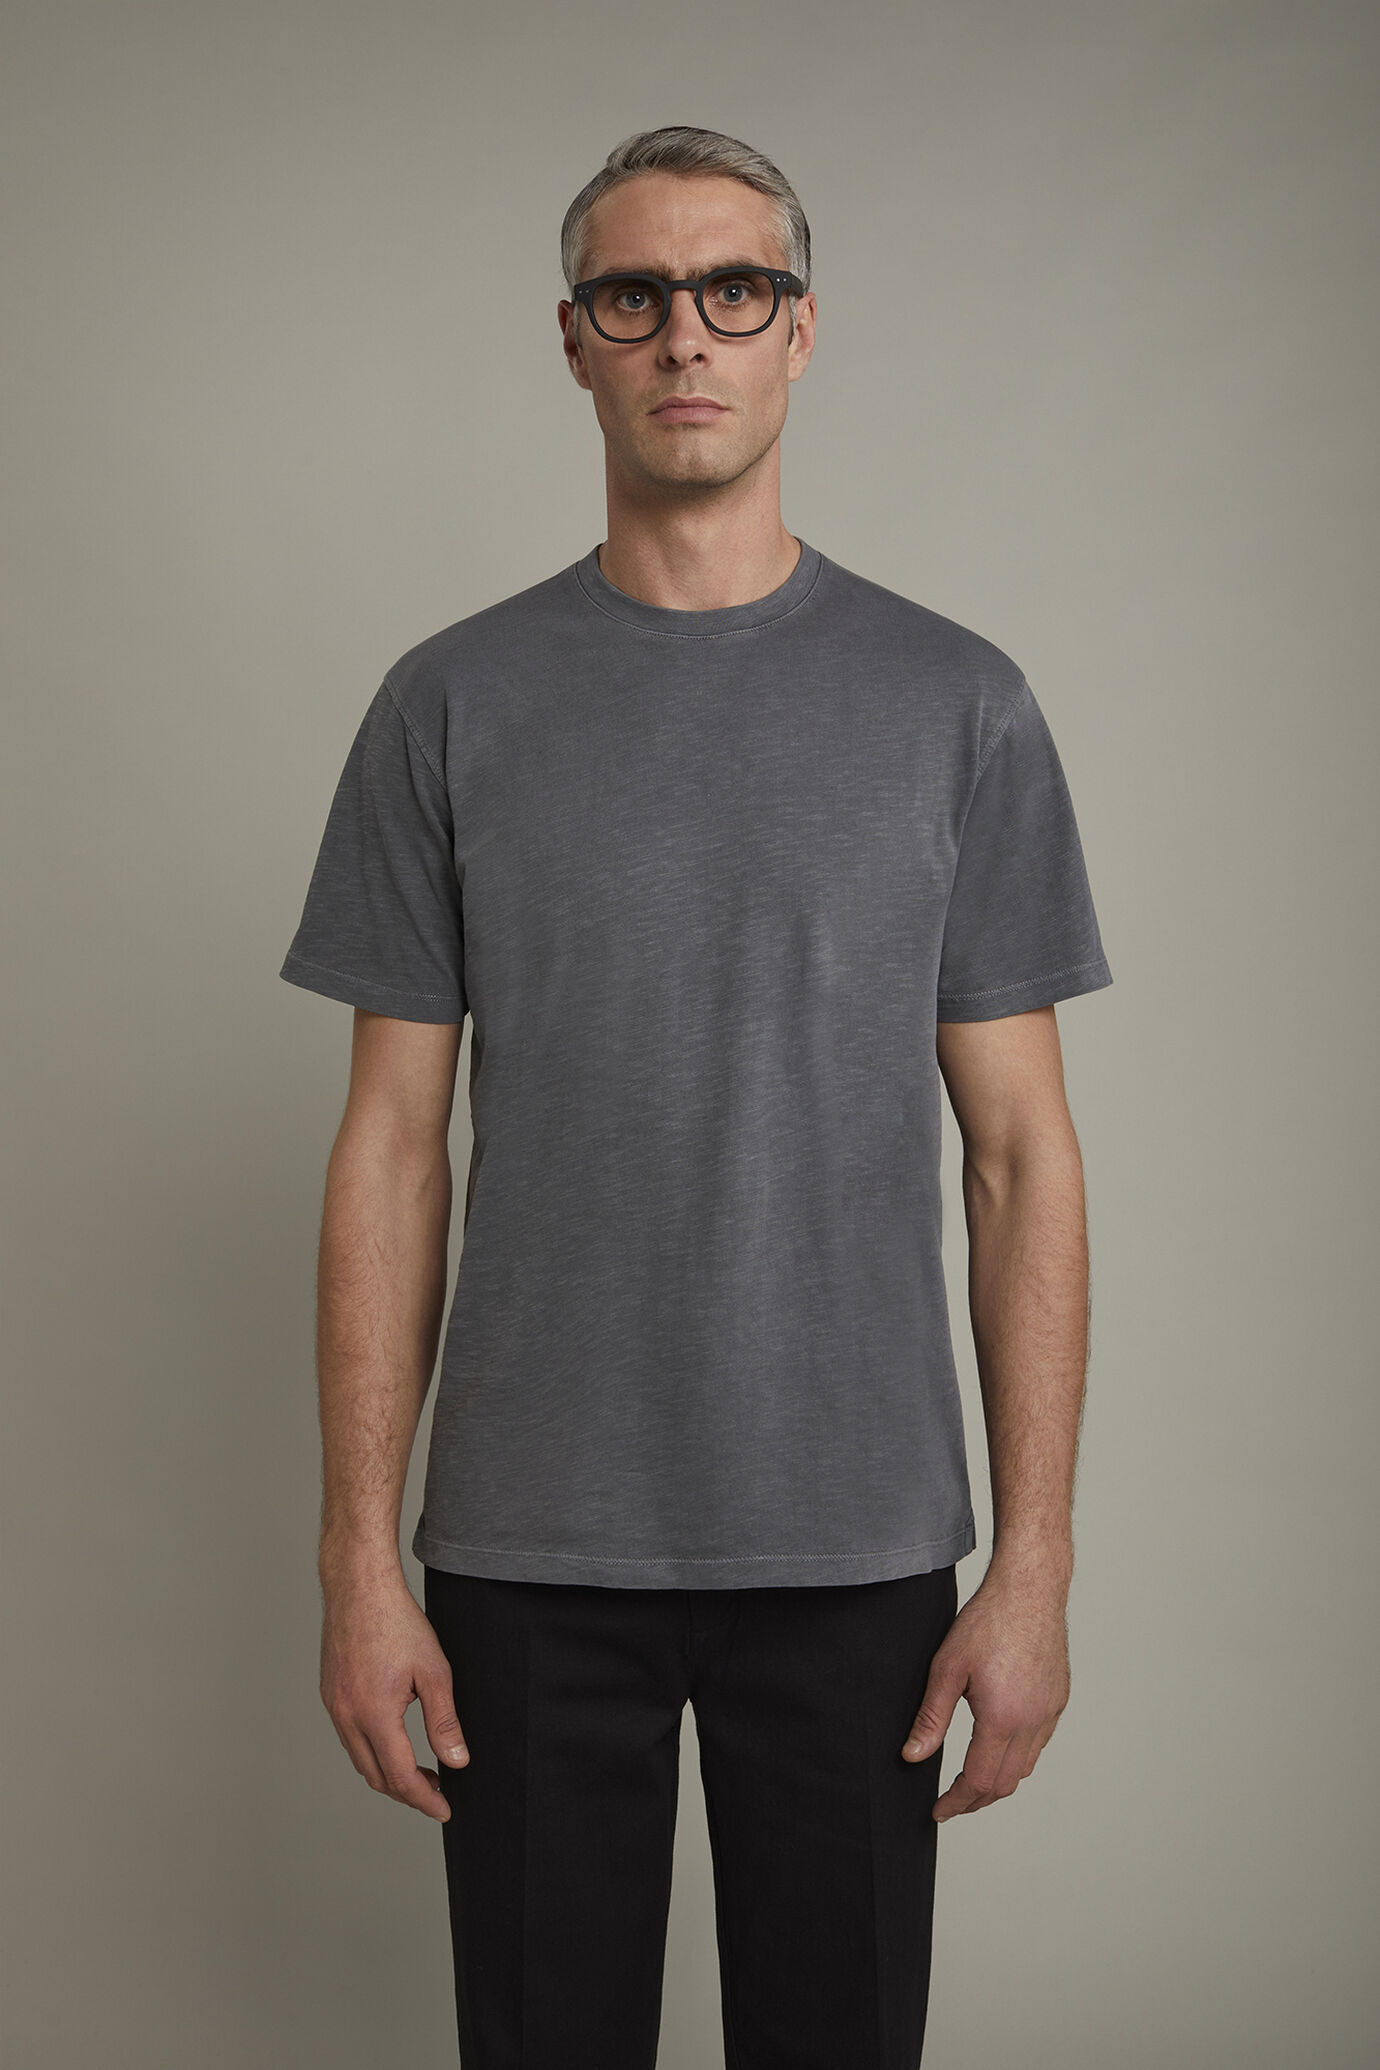 Men’s round neck t-shirt 100% cotton flamed effect regular fit image number 2